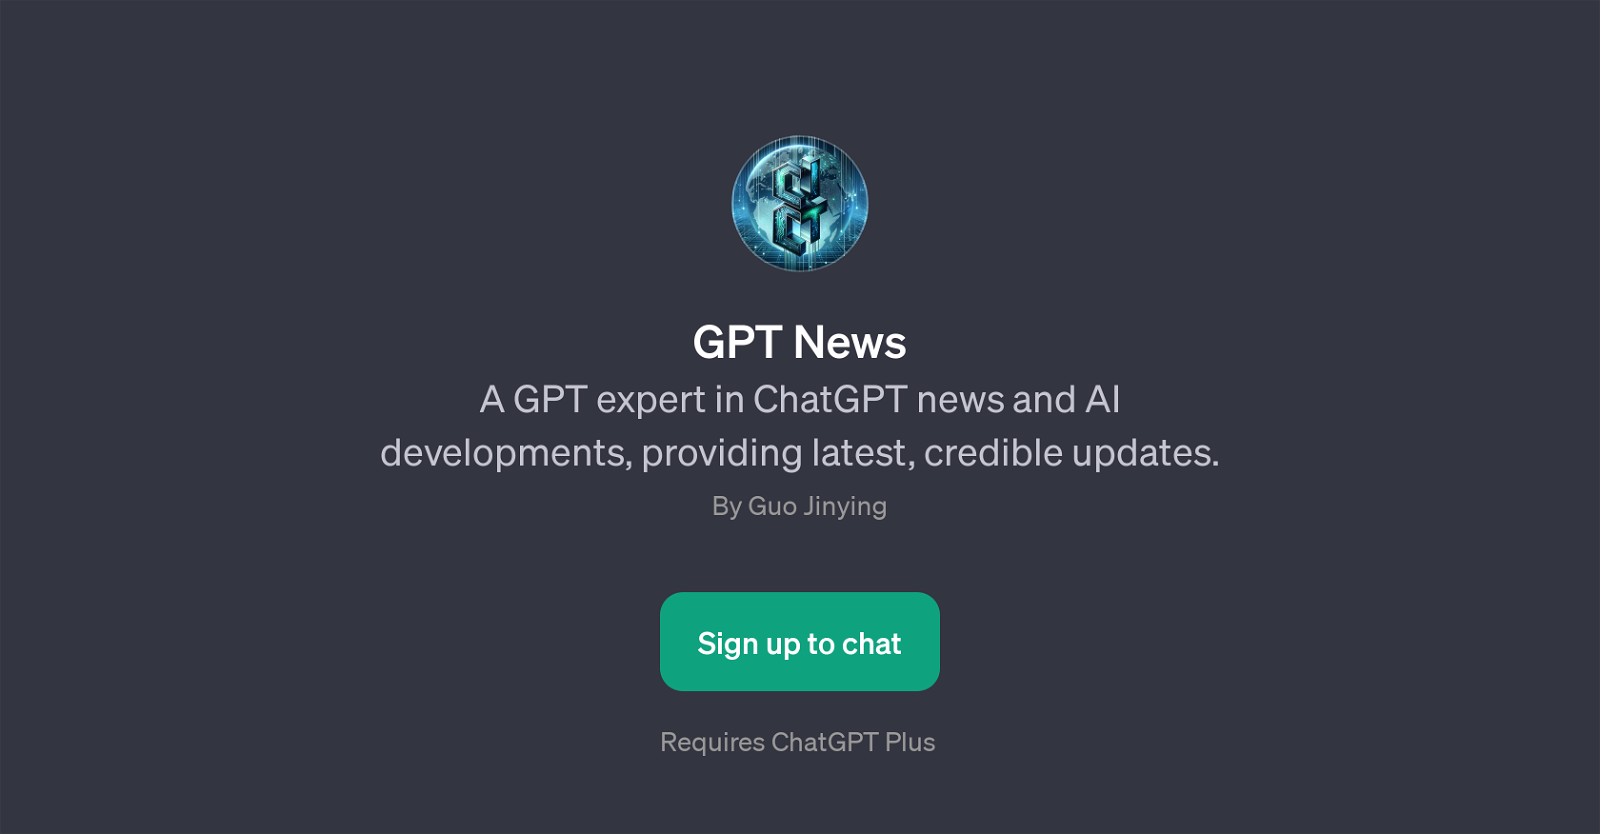 GPT News website